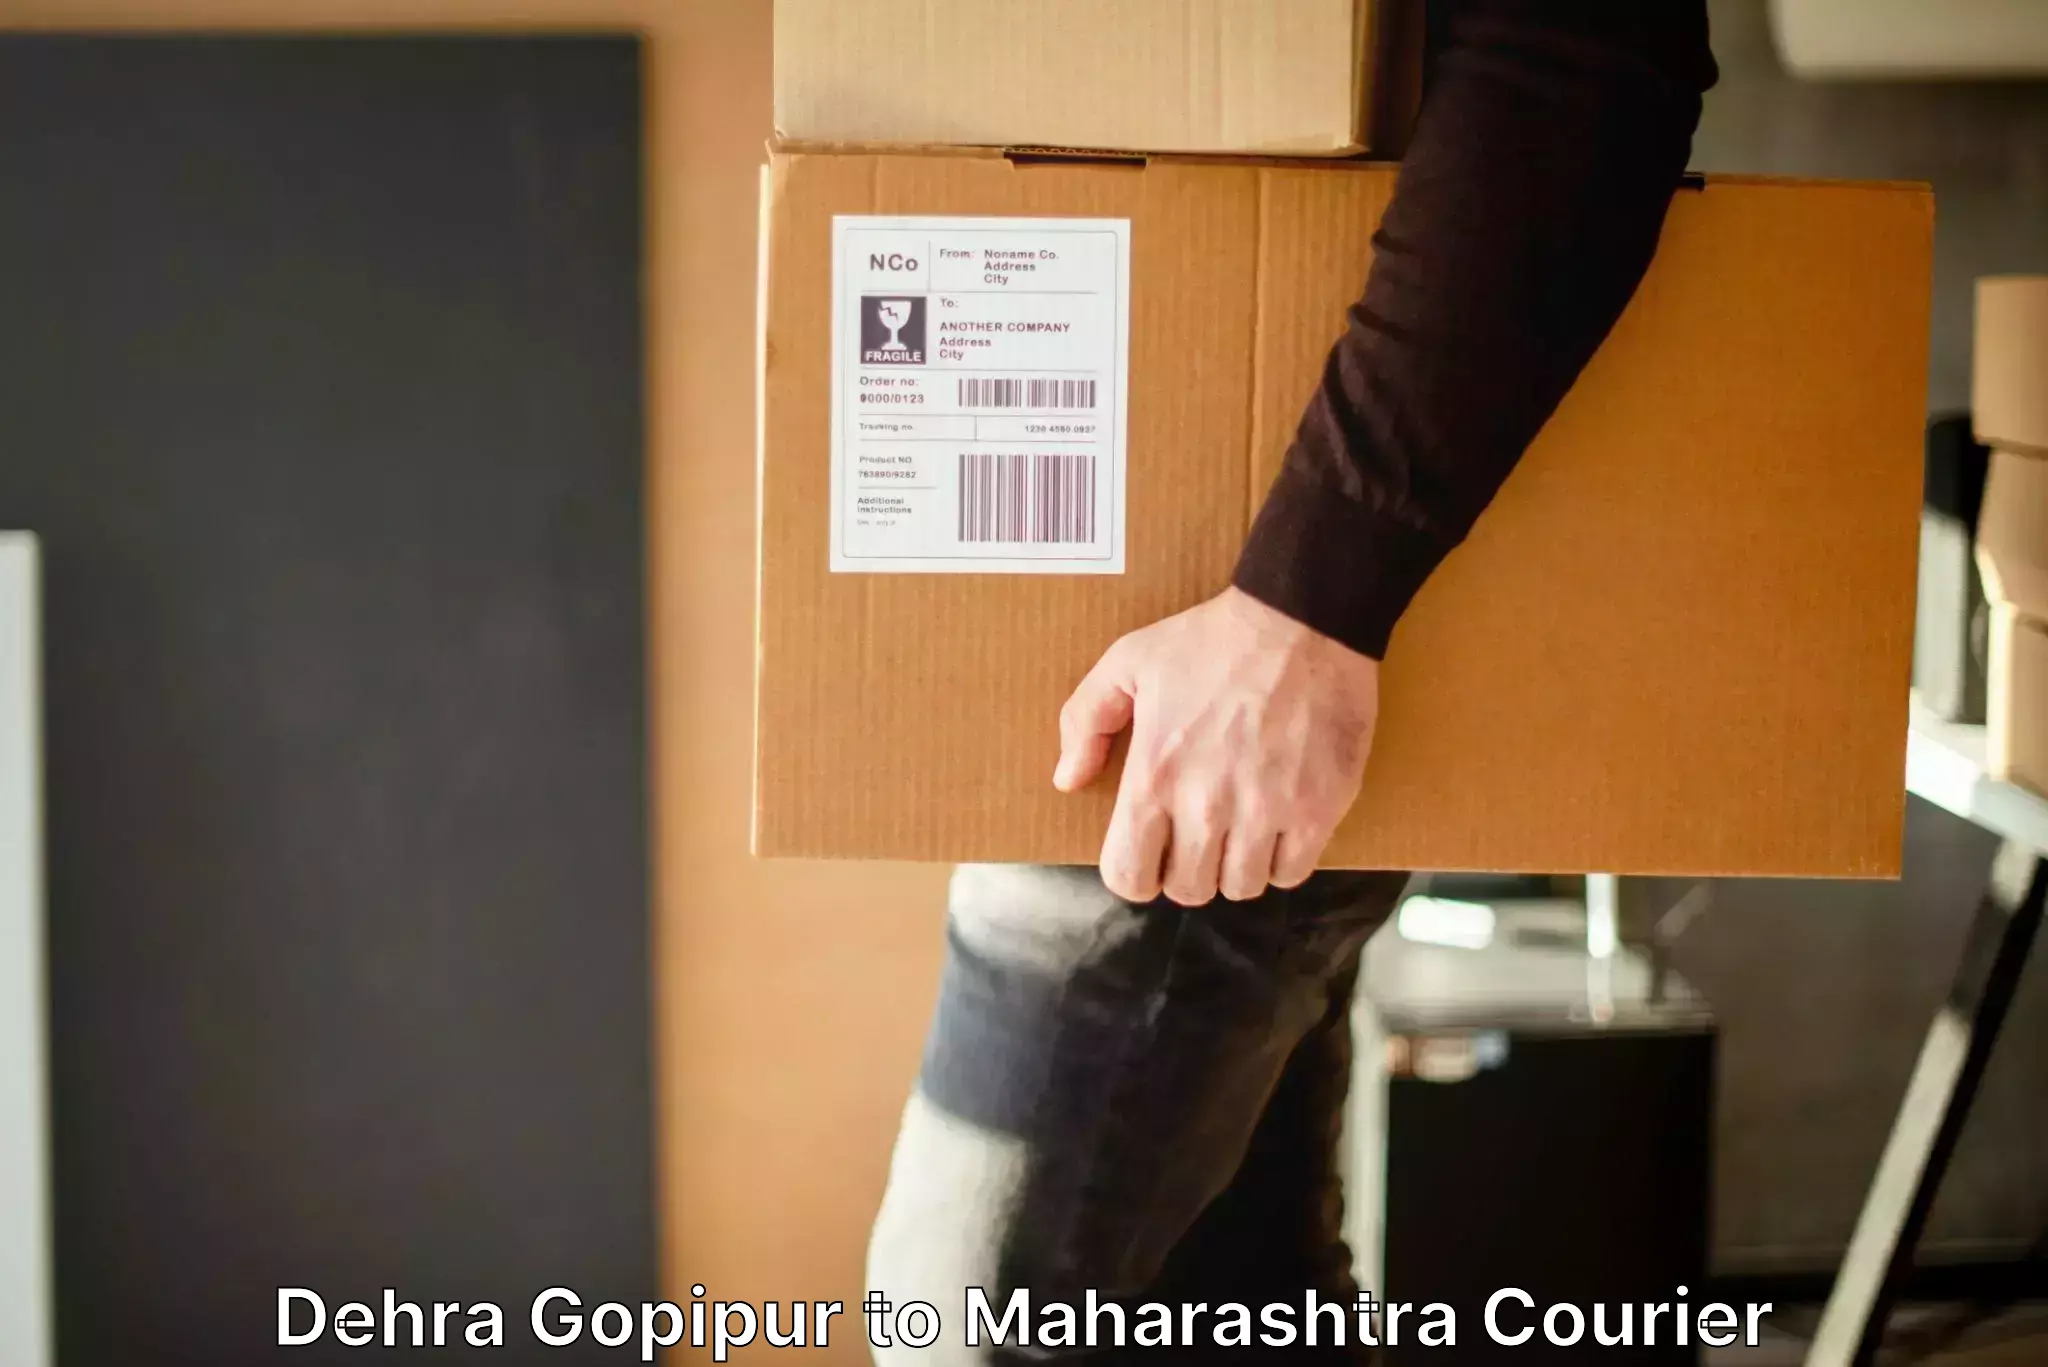 Baggage transport network Dehra Gopipur to Maharashtra